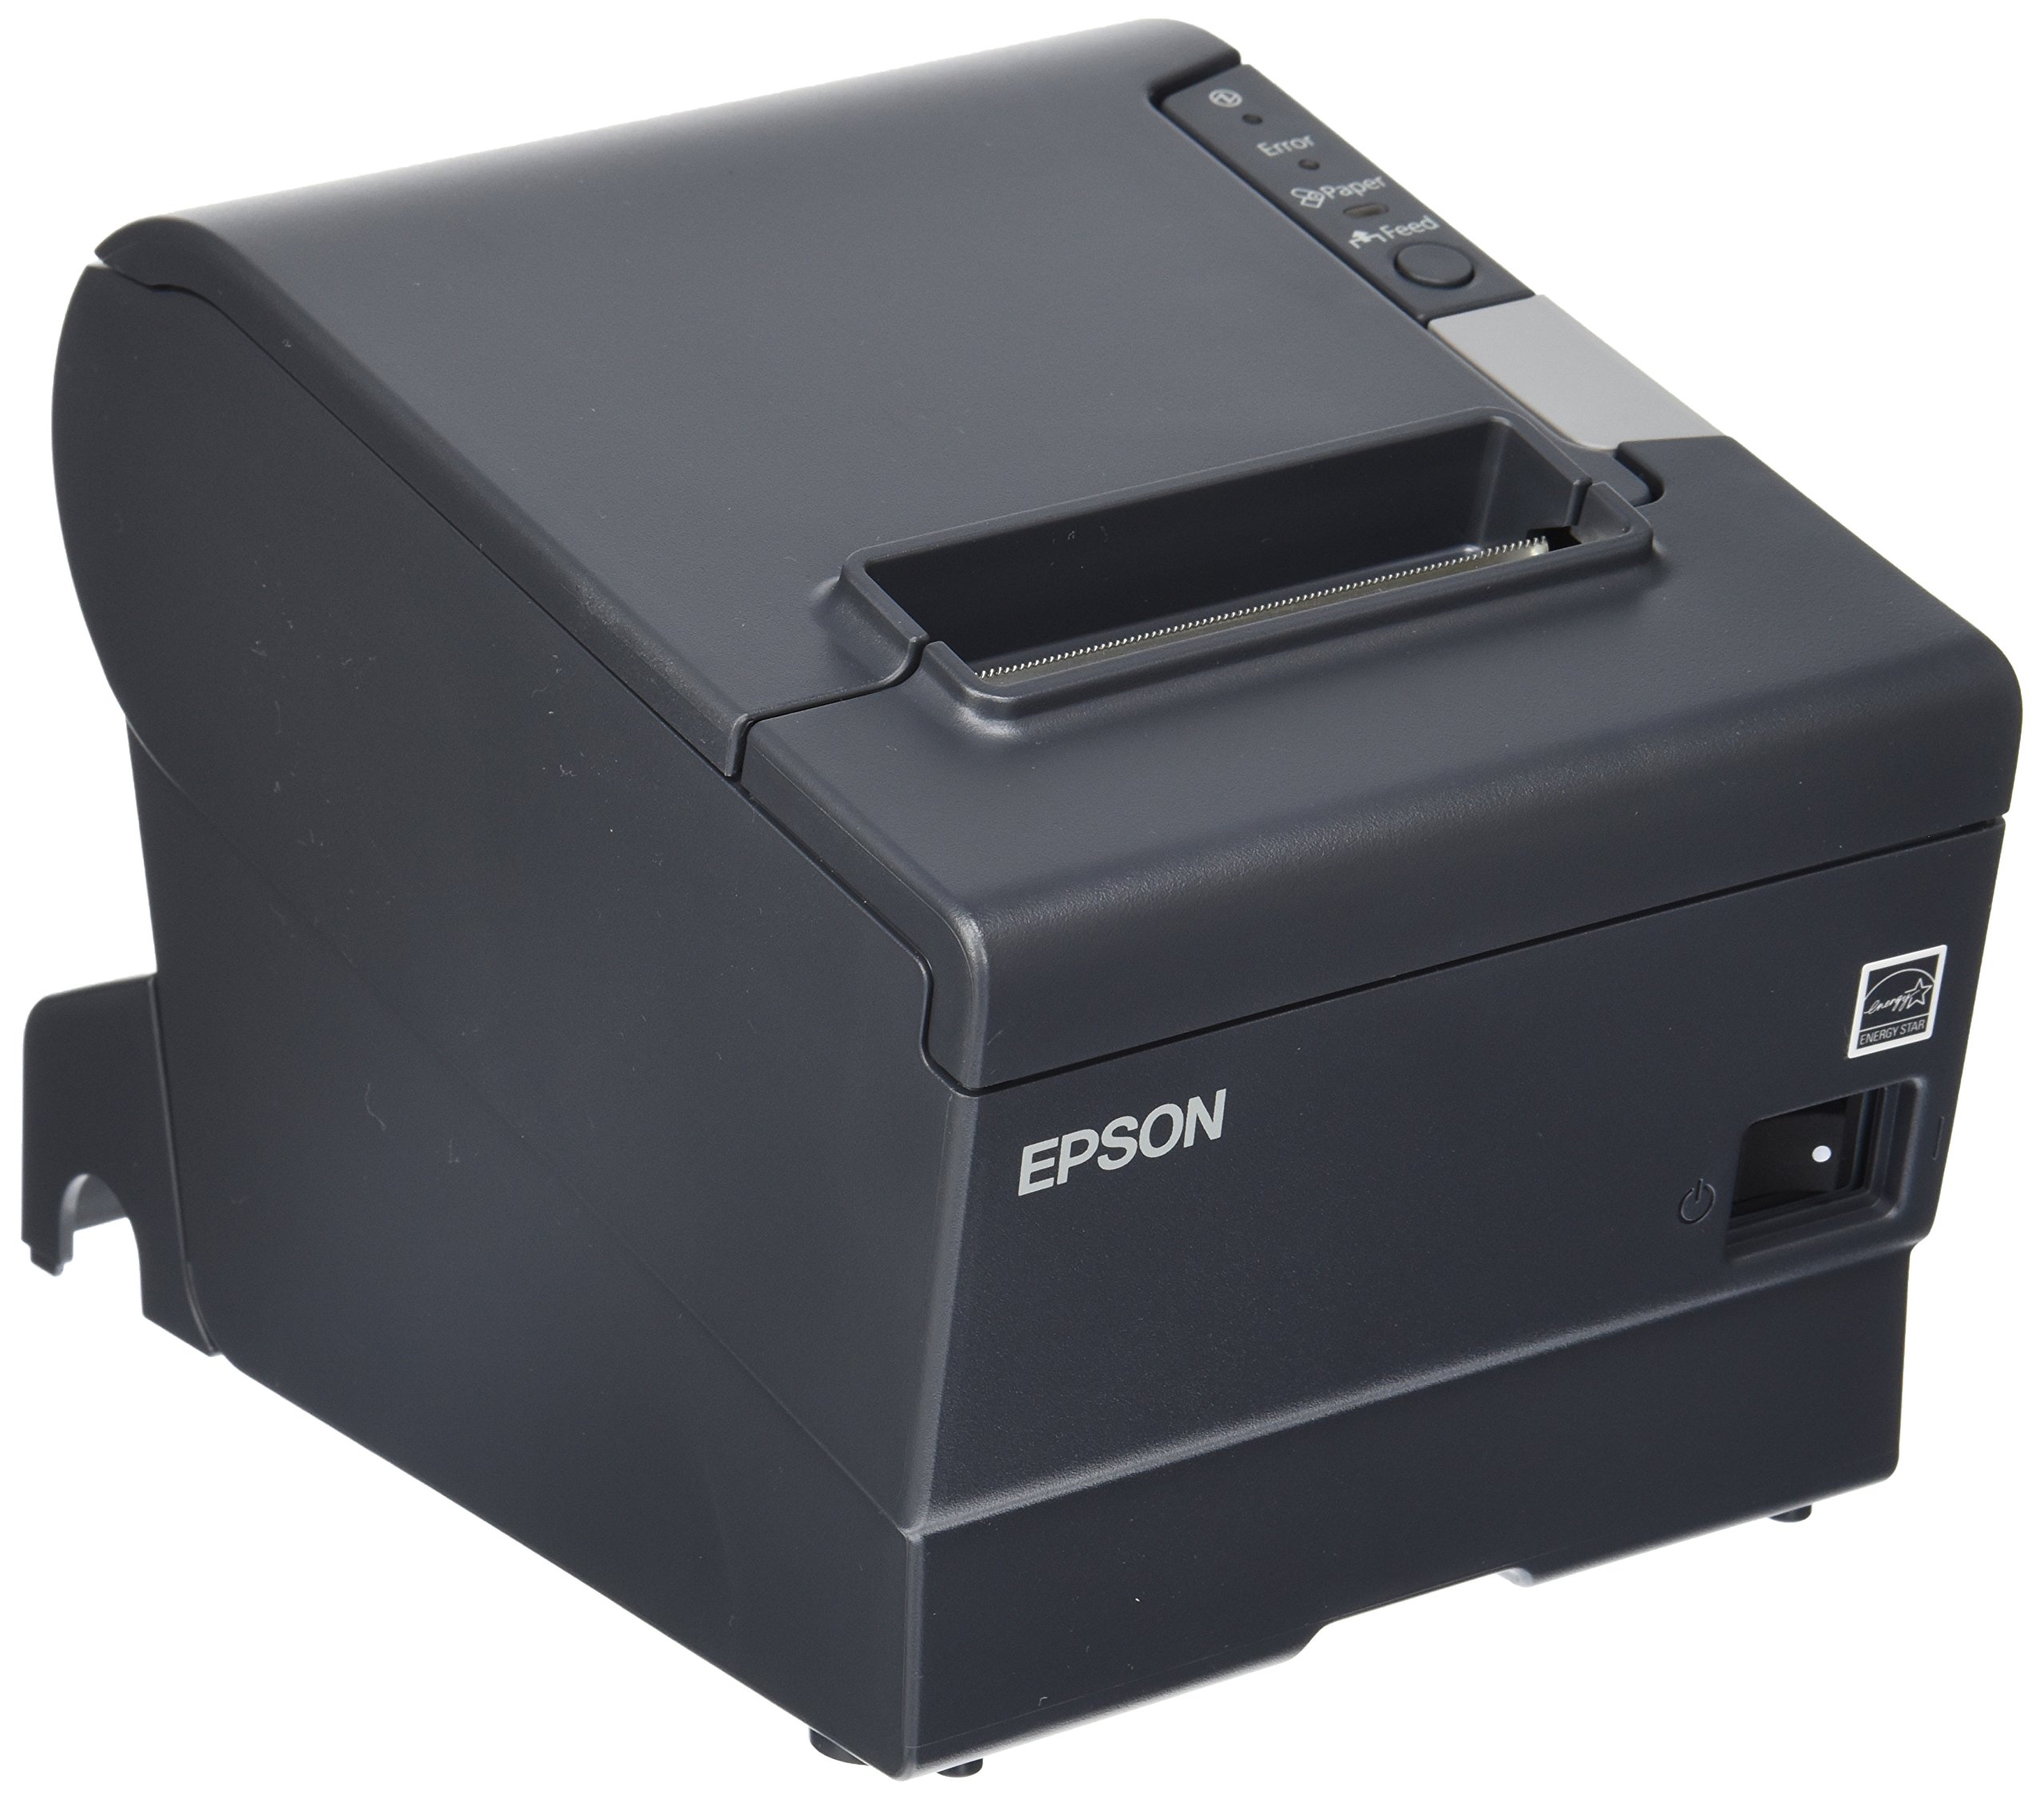 Epson C31CA85834 TM-T88V Direct Thermal Receipt Printer PAR Plus USB EDG PWR Energy Star, Monochrome, 5.8